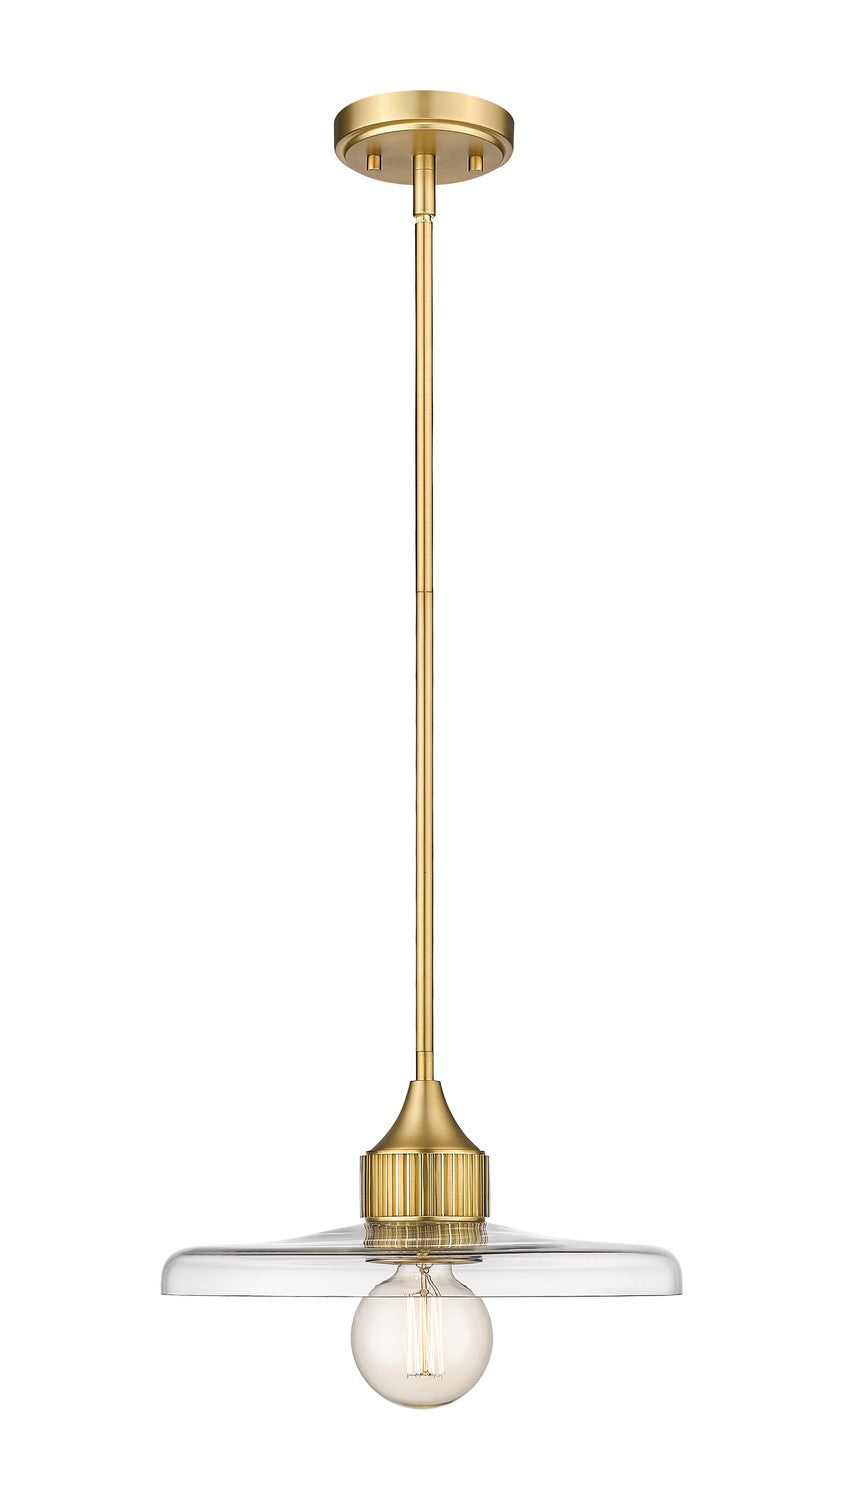 Paloma One Light Pendant in Olde Brass by Z-Lite Lighting